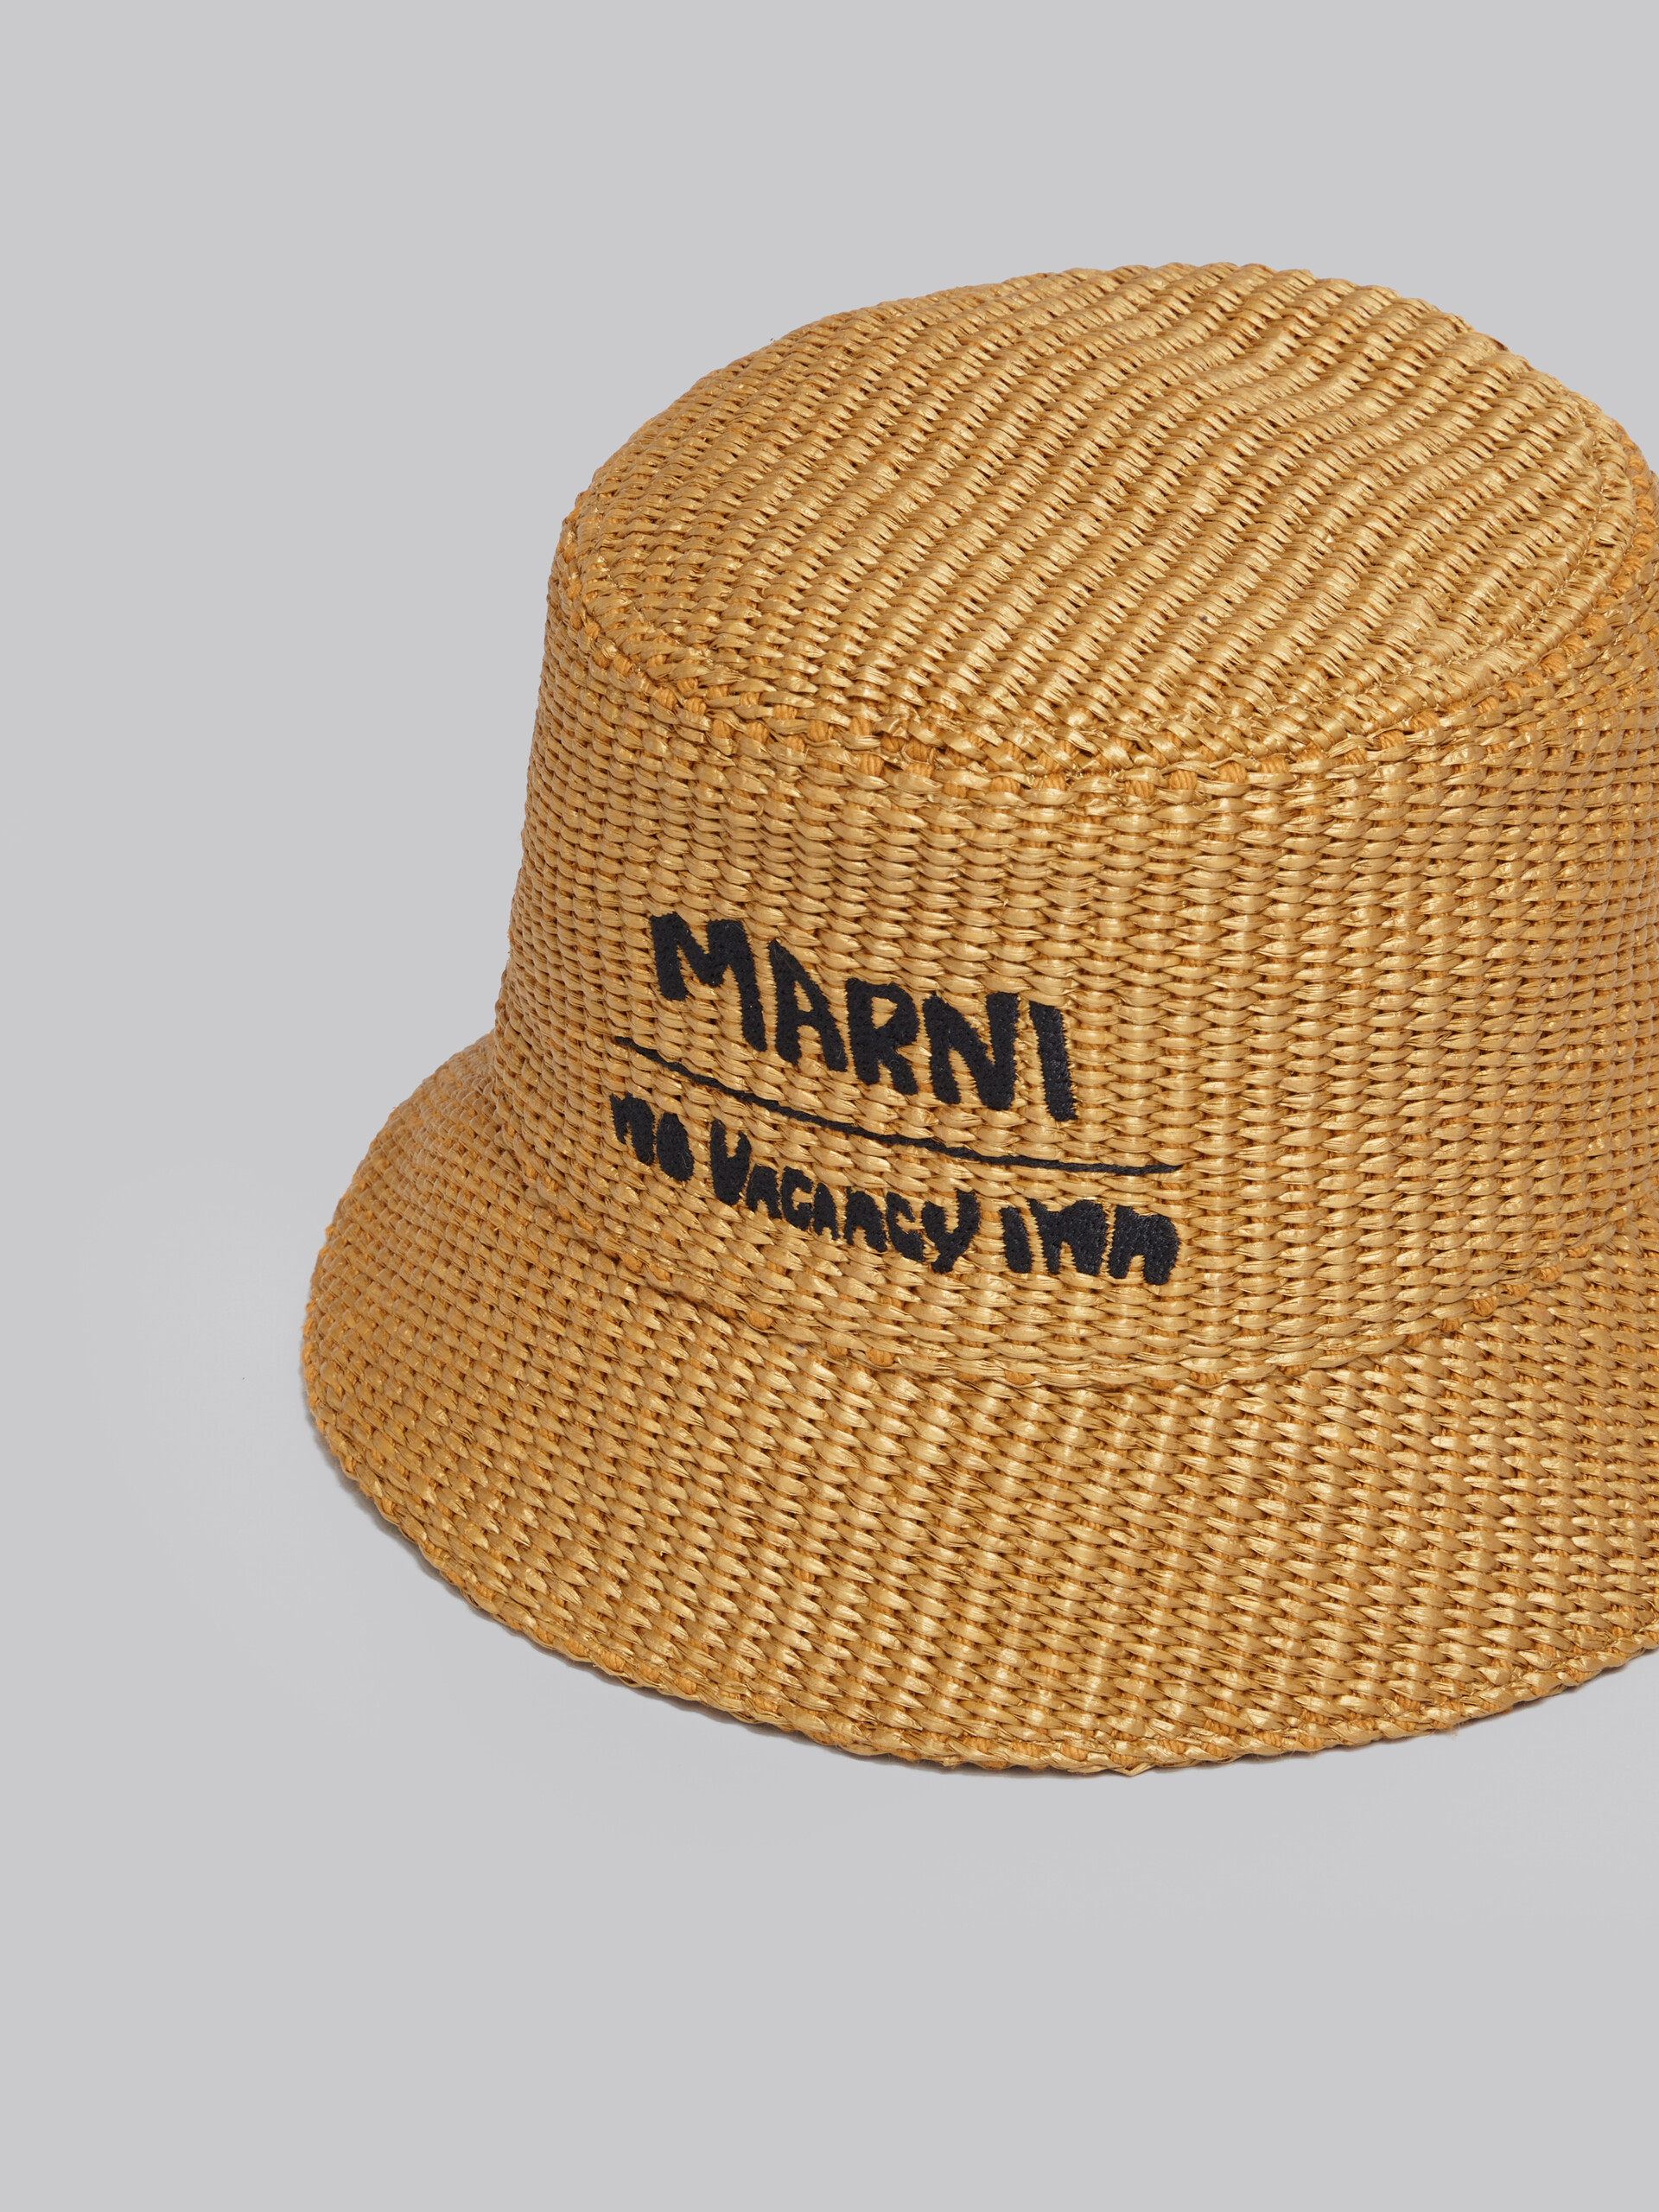 Marni x No Vacancy Inn - Caramel hat in raffia fabric - Hats - Image 4